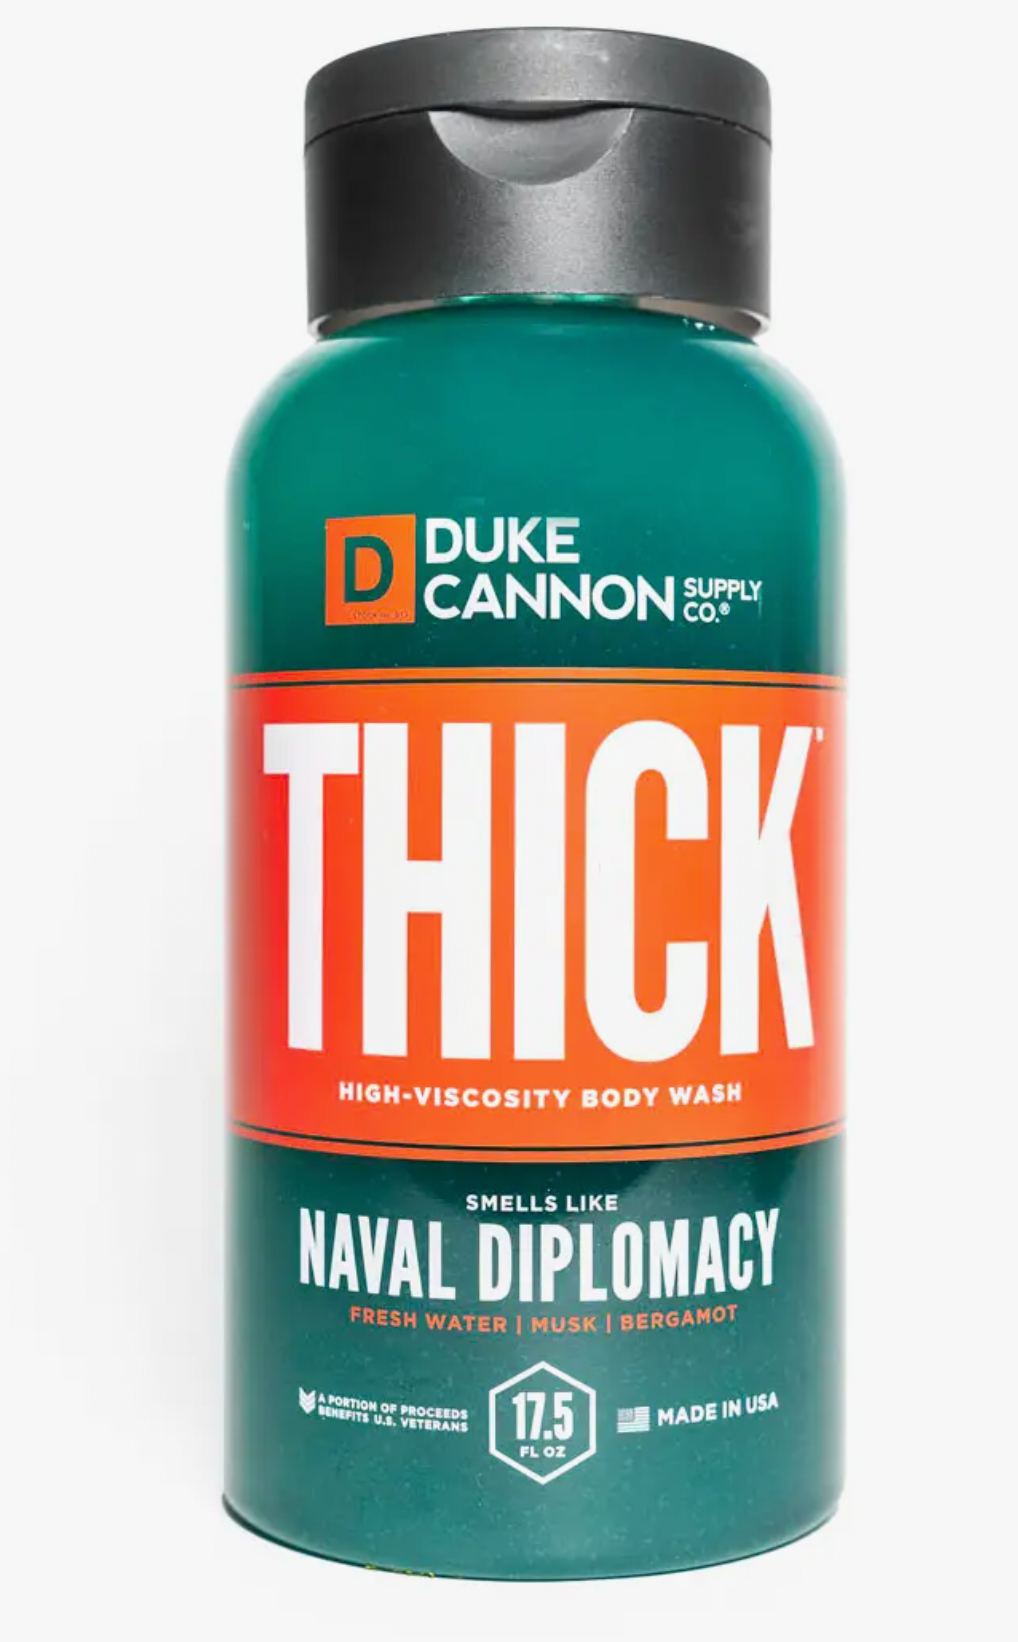 Duke Cannon THICK High-Viscosity Body Wash - Naval Diplomacy